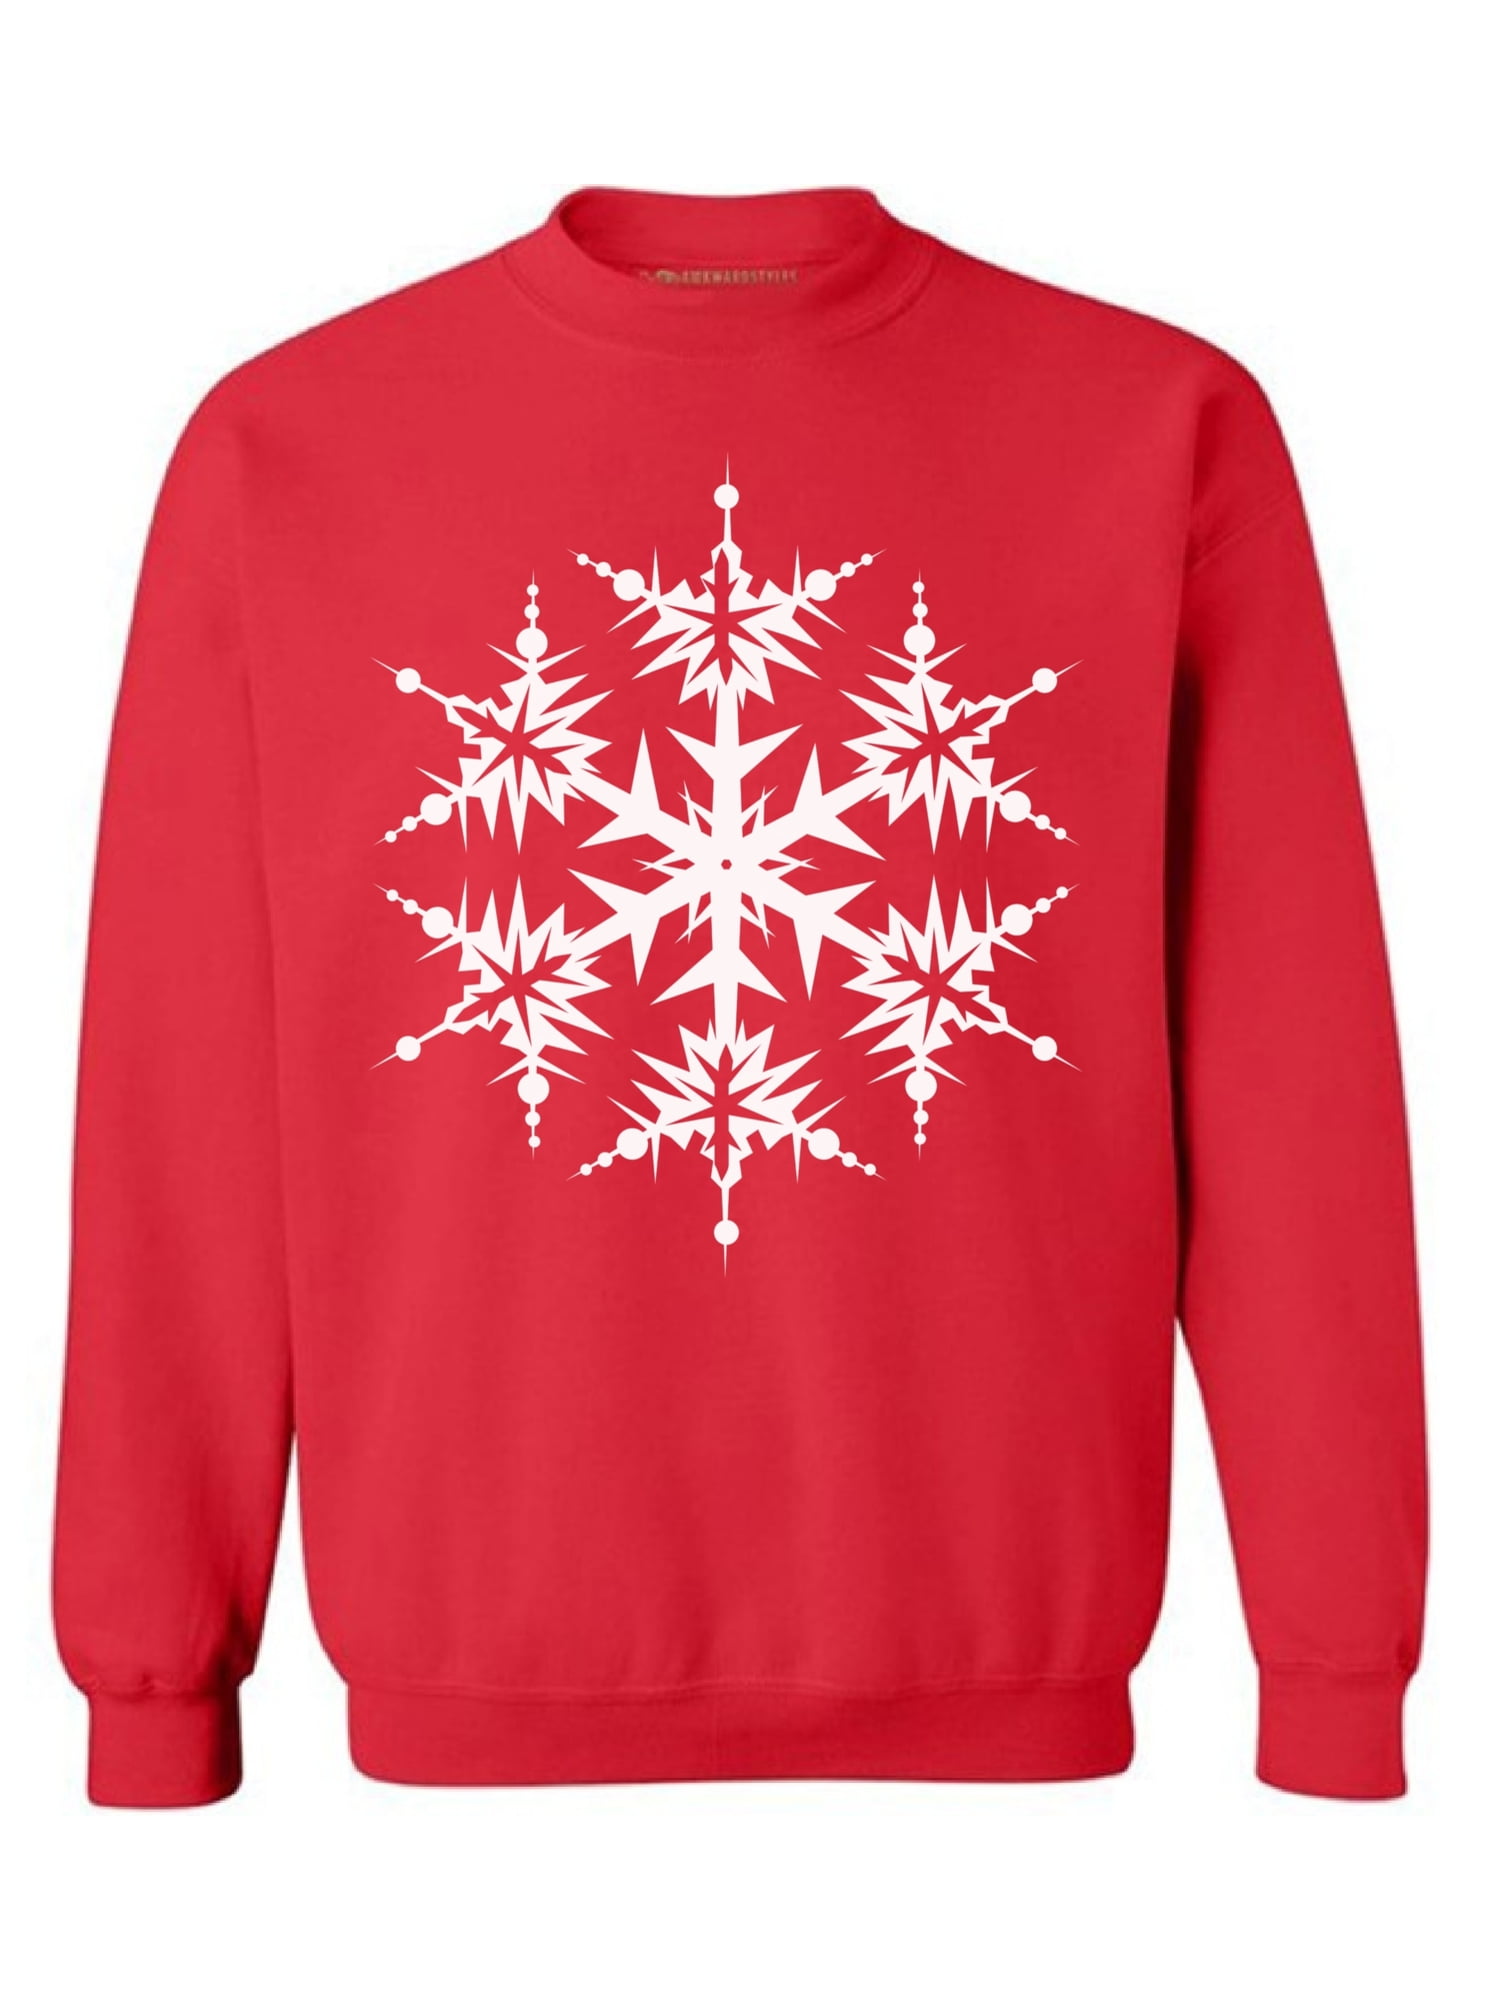 Christmas Sweatshirts Cute Weed Leaf Snowflake Pullover Xmas Gifts Winter Cloths 